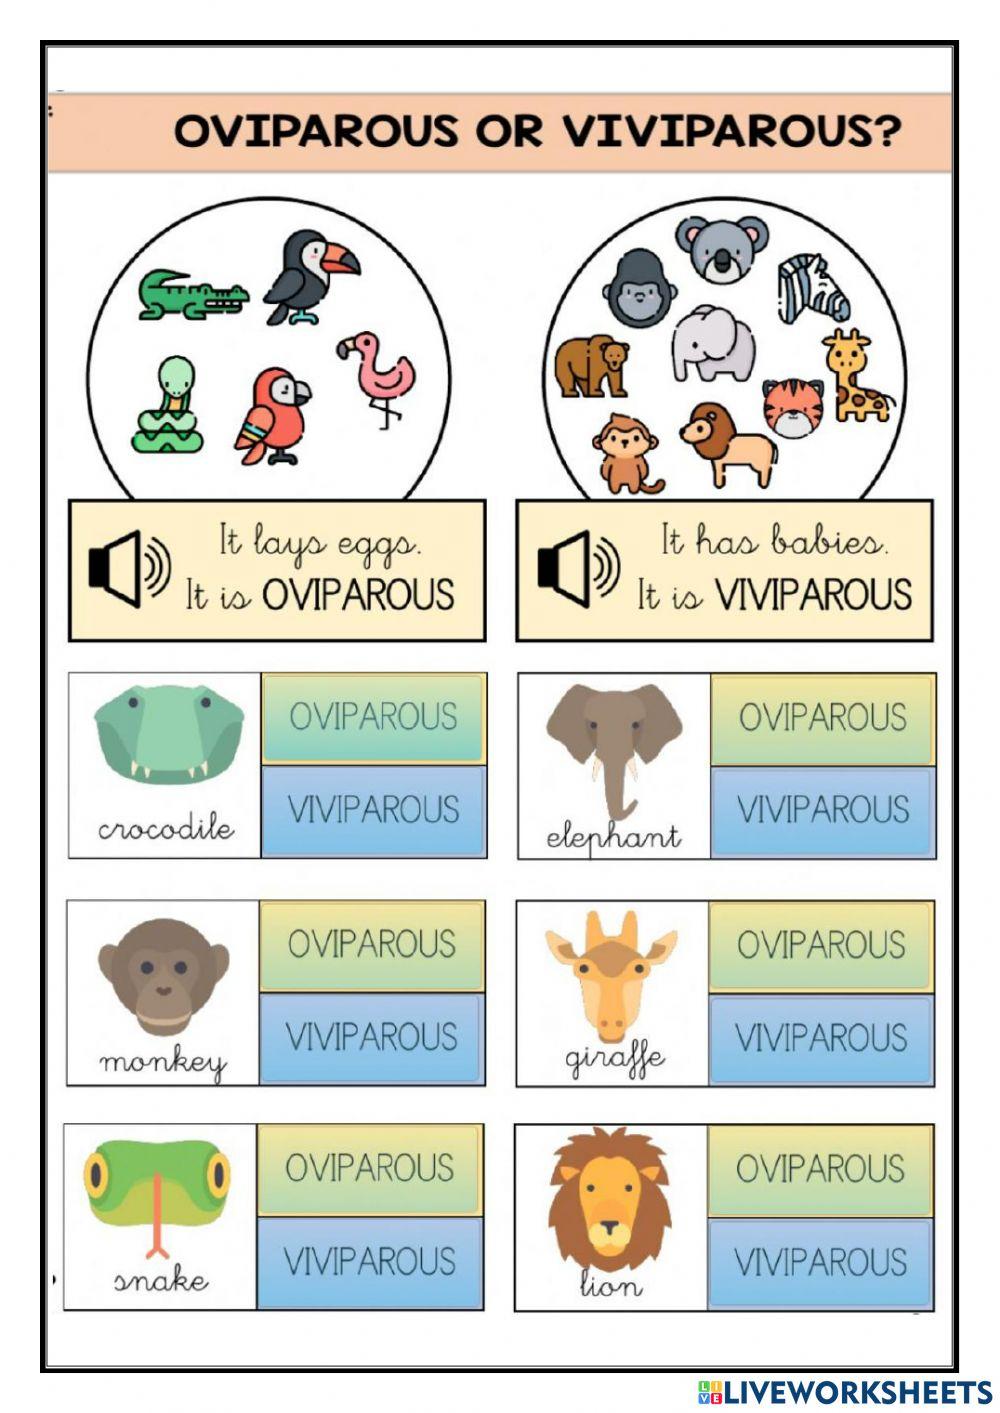 Oviparous or viviparous animals